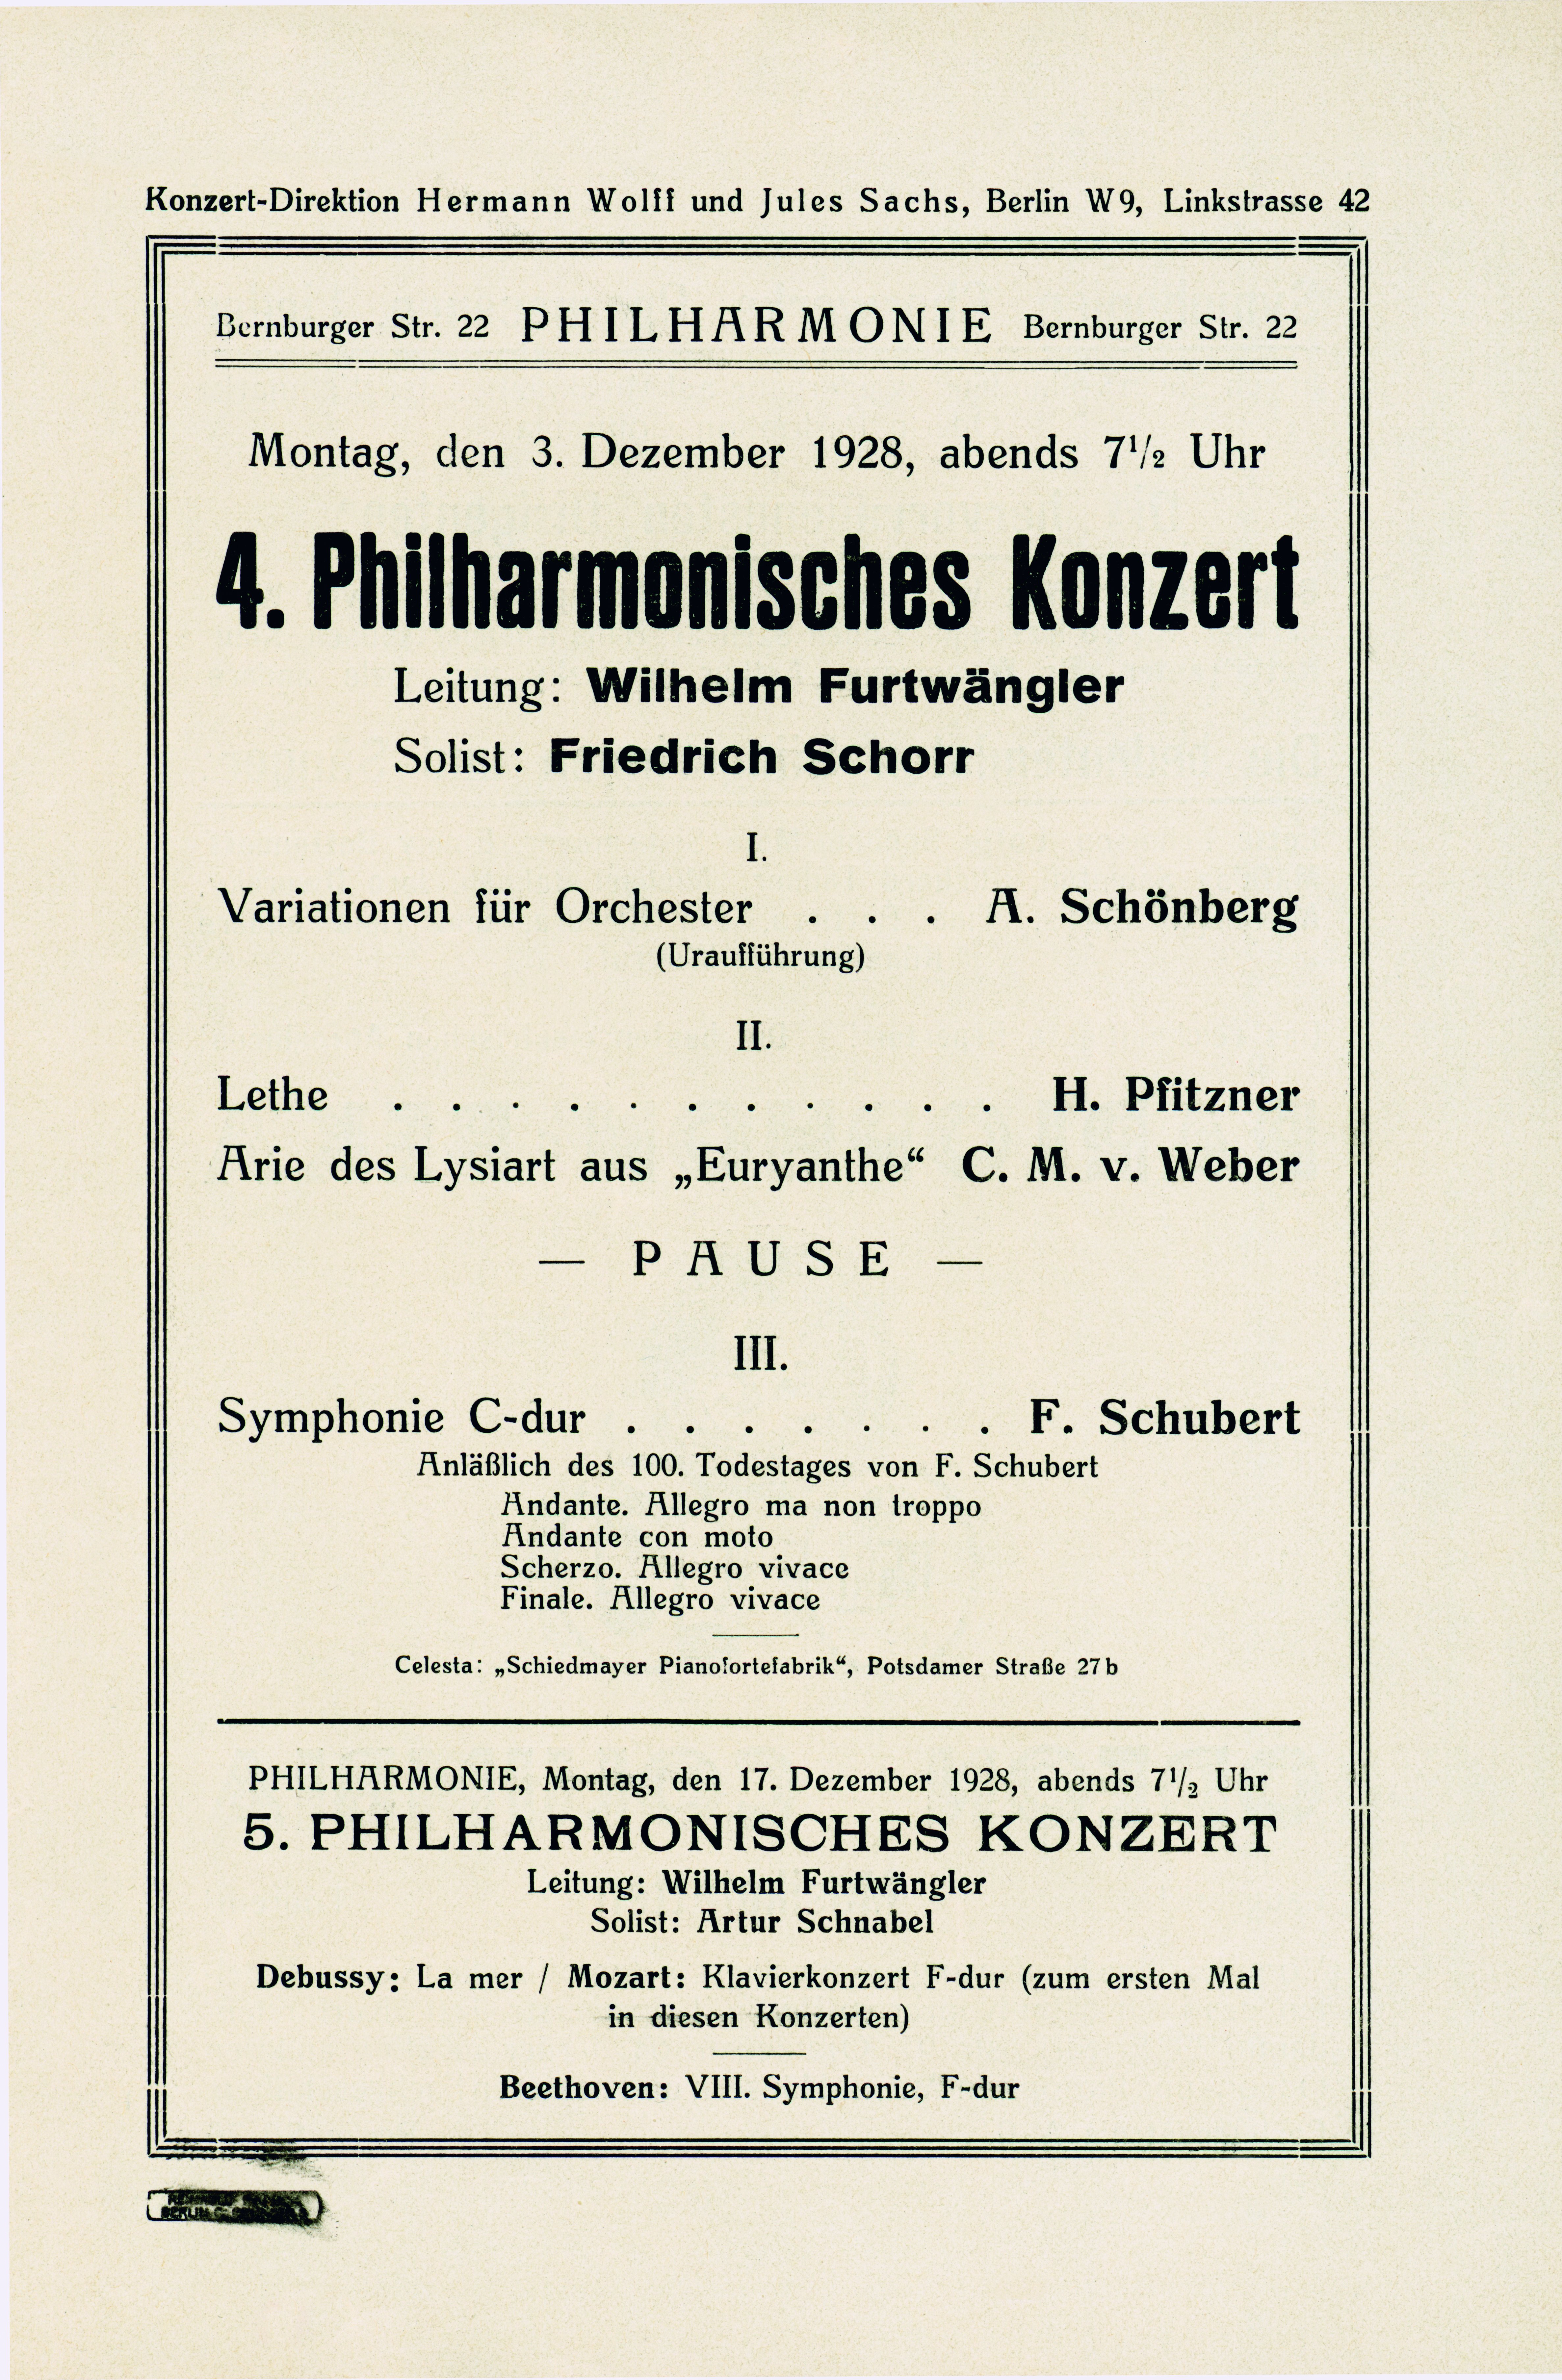 A programm leaflet of a Schoenberg concerto.